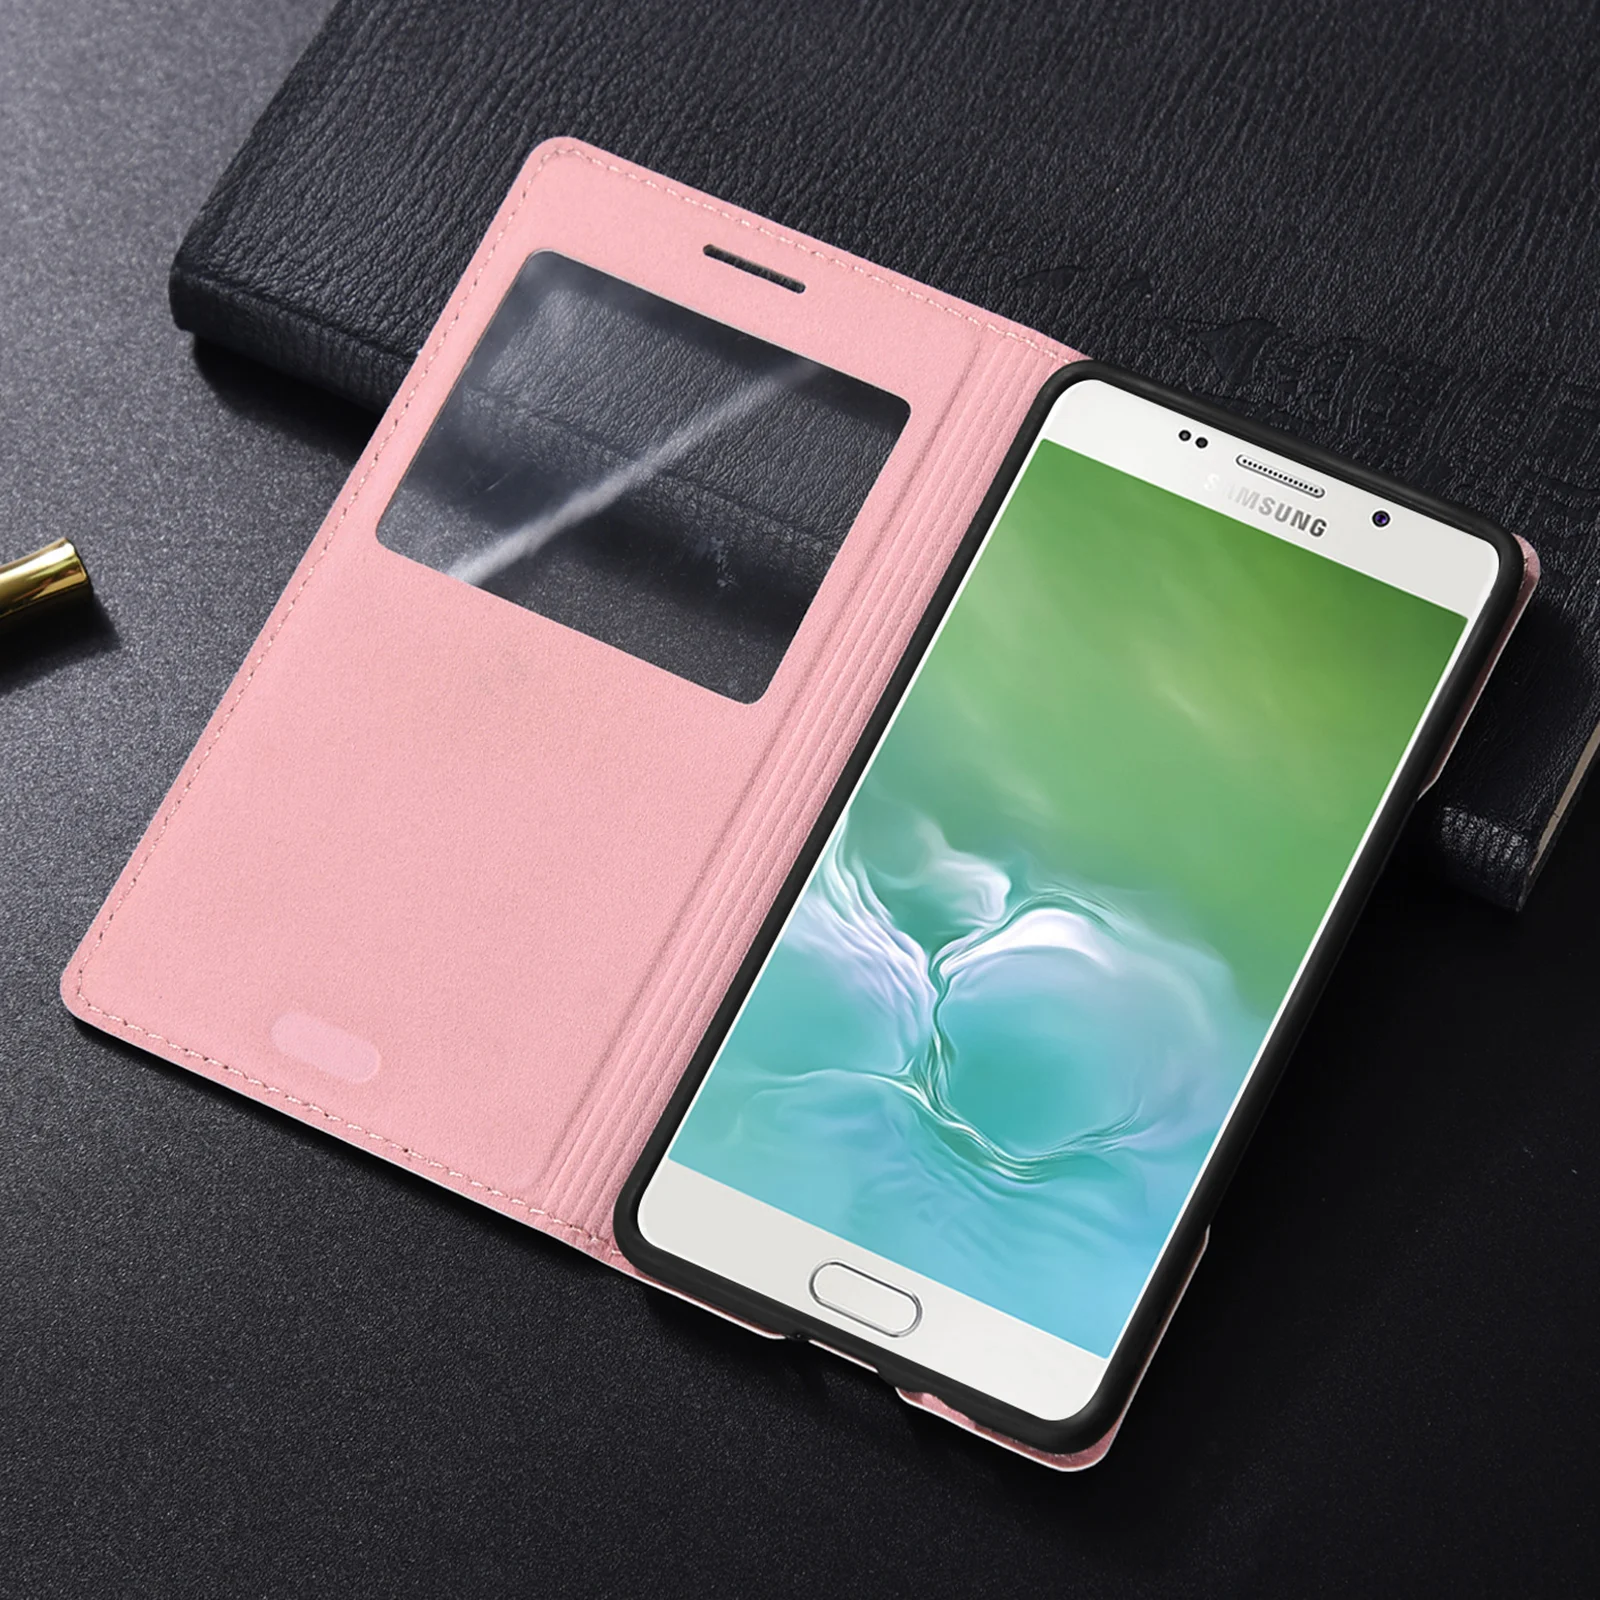 

Flip Cover Leather Phone Case For Moto G G4 G5 G5s G6 G7 G8 G9 E7 Plus Power Play Lite G60 G60S G50 G30 G20 10 5G 4G Stylus 2020